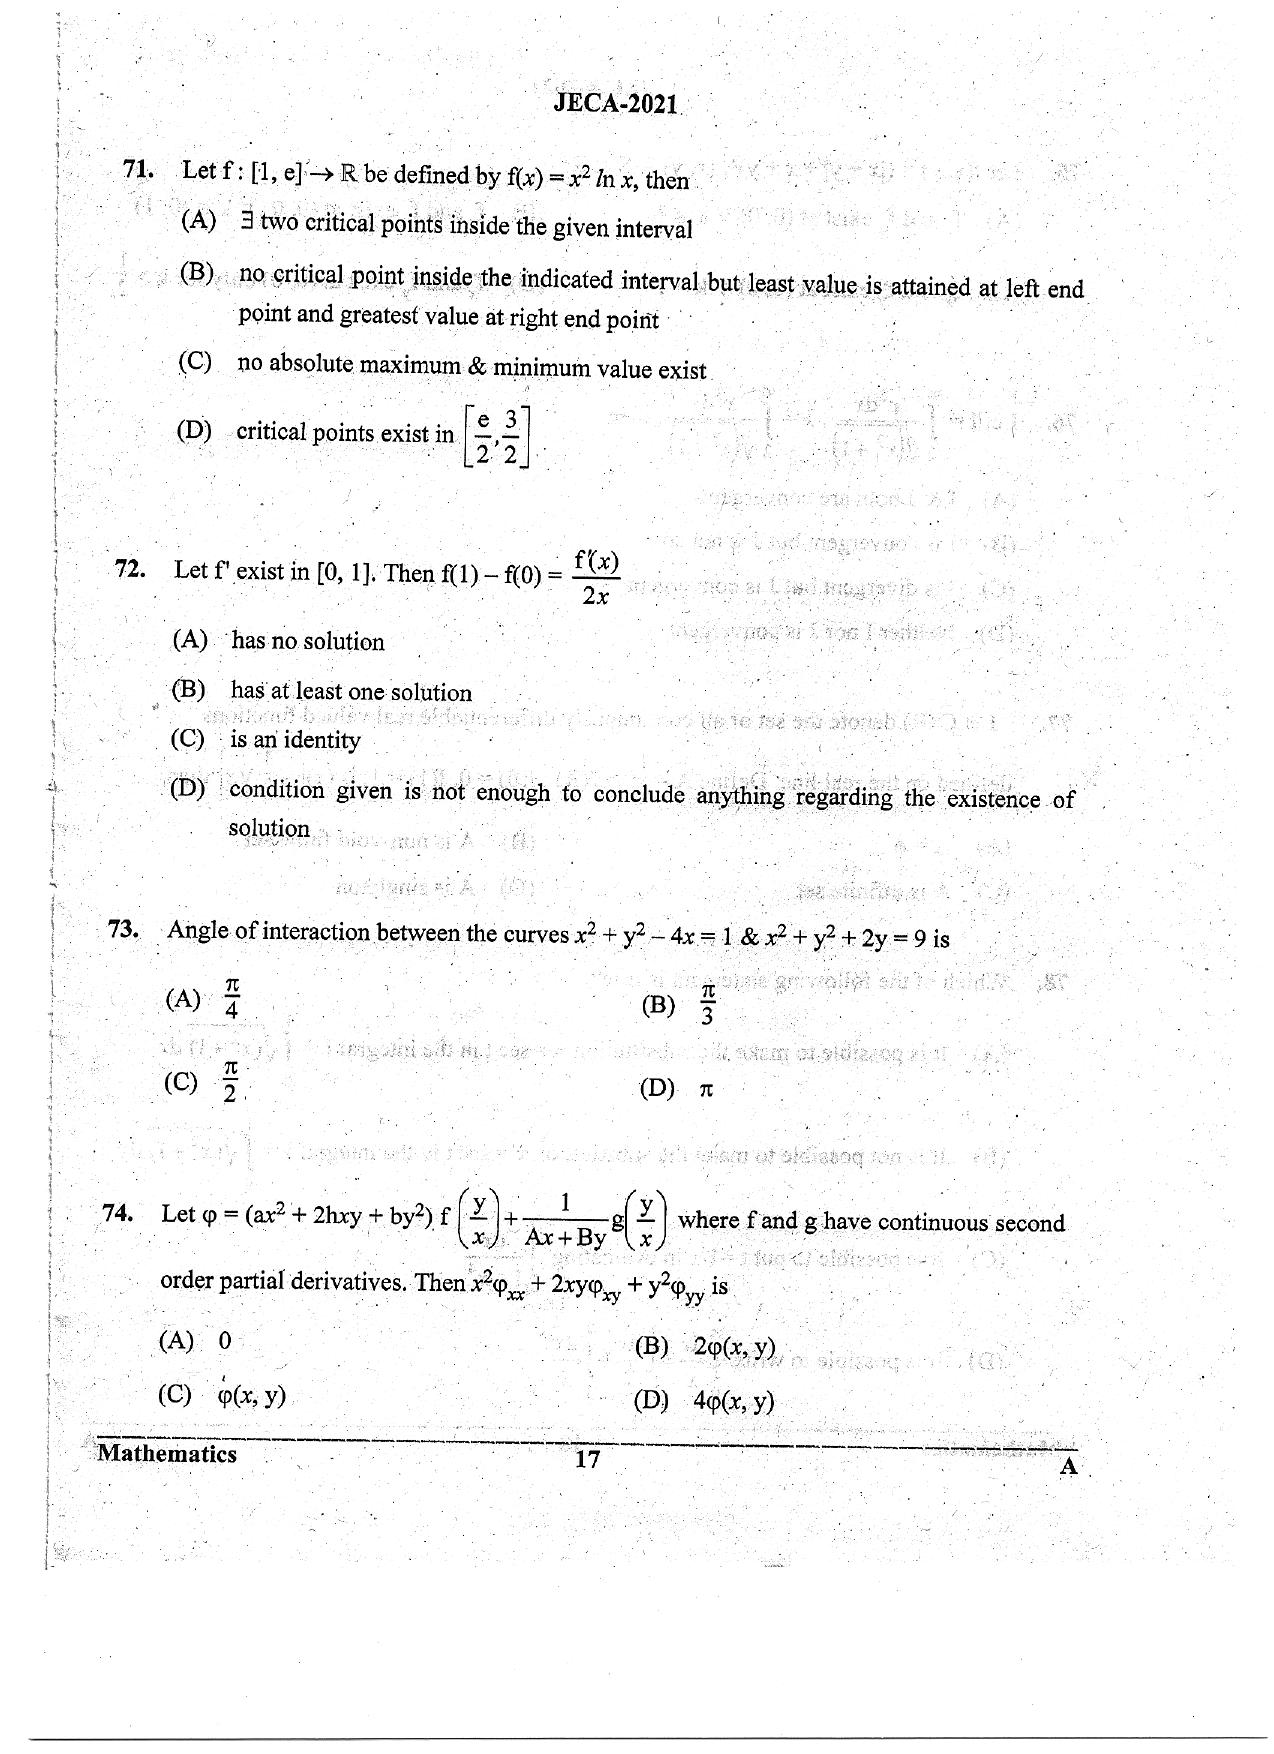 WB JECA 2021 Mathematics Question Paper - Page 17